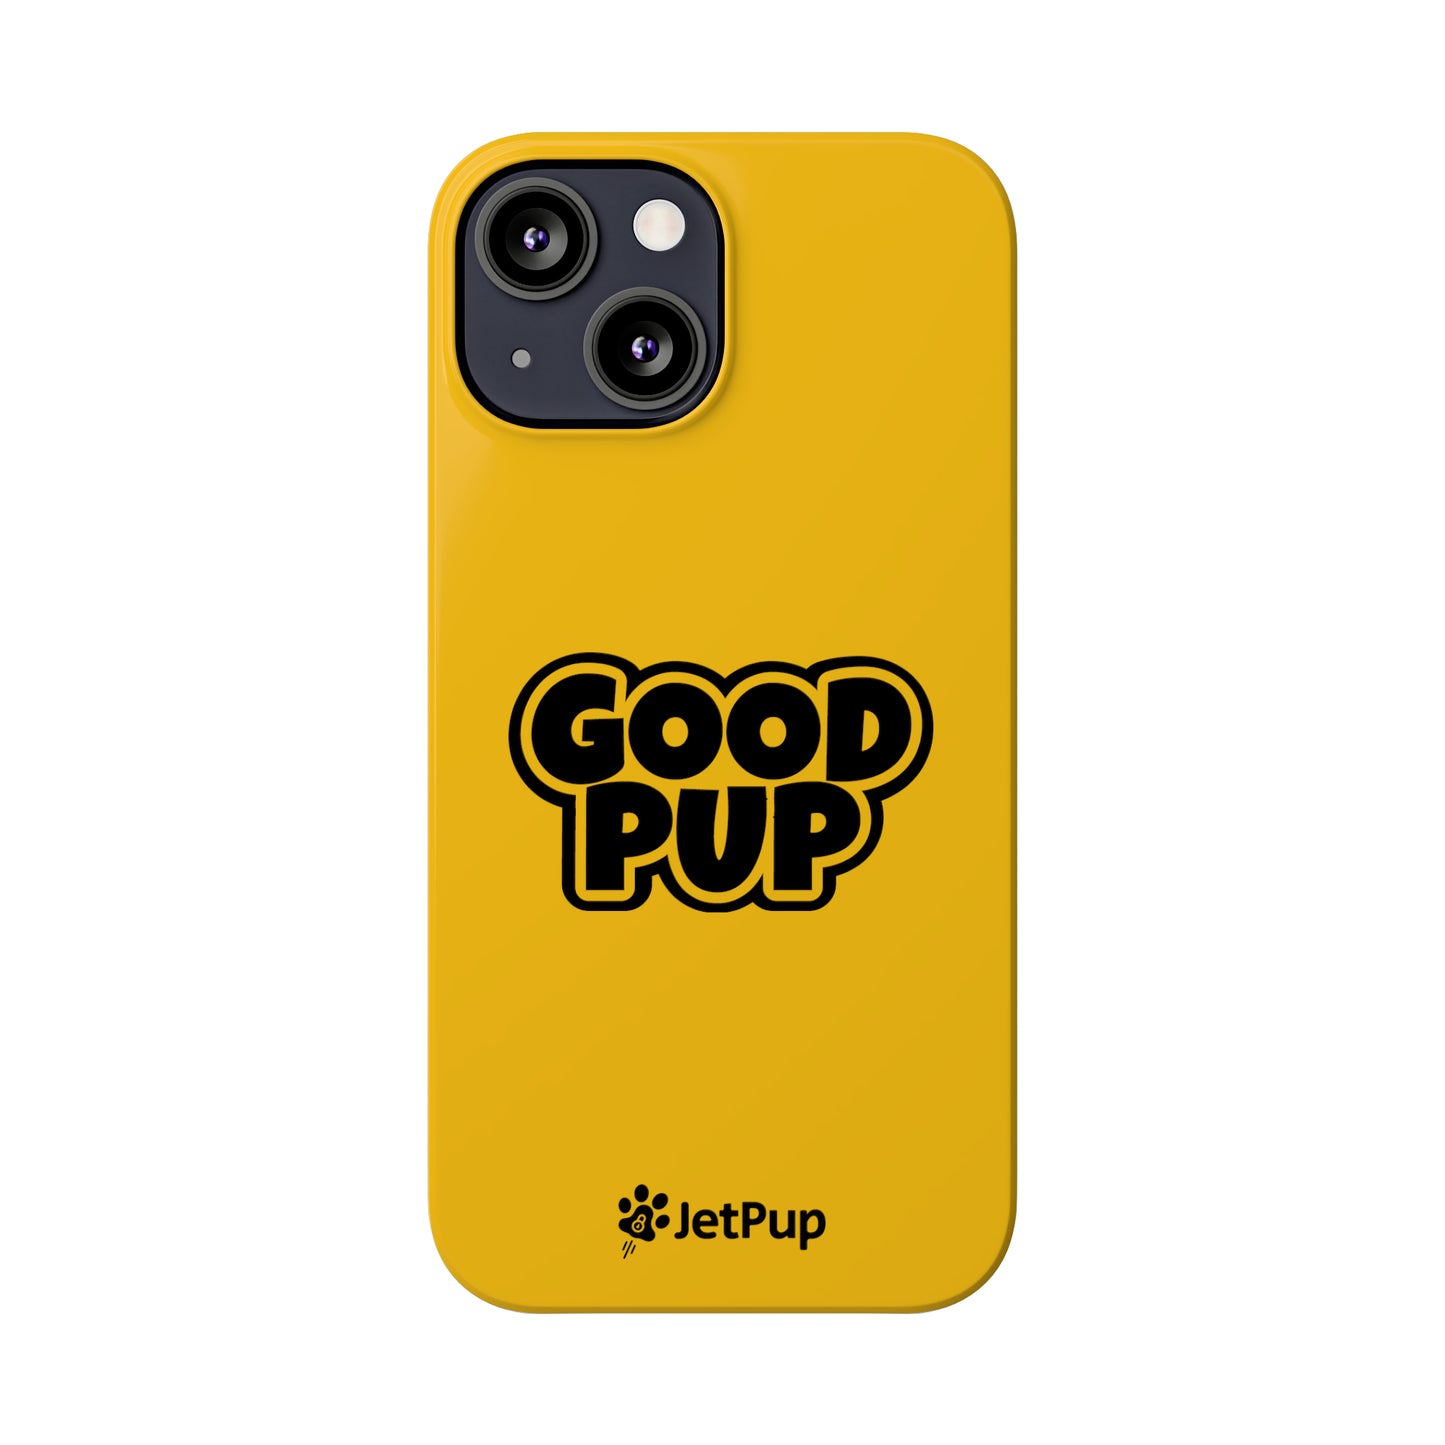 Good Pup Slim iPhone Cases - Yellow